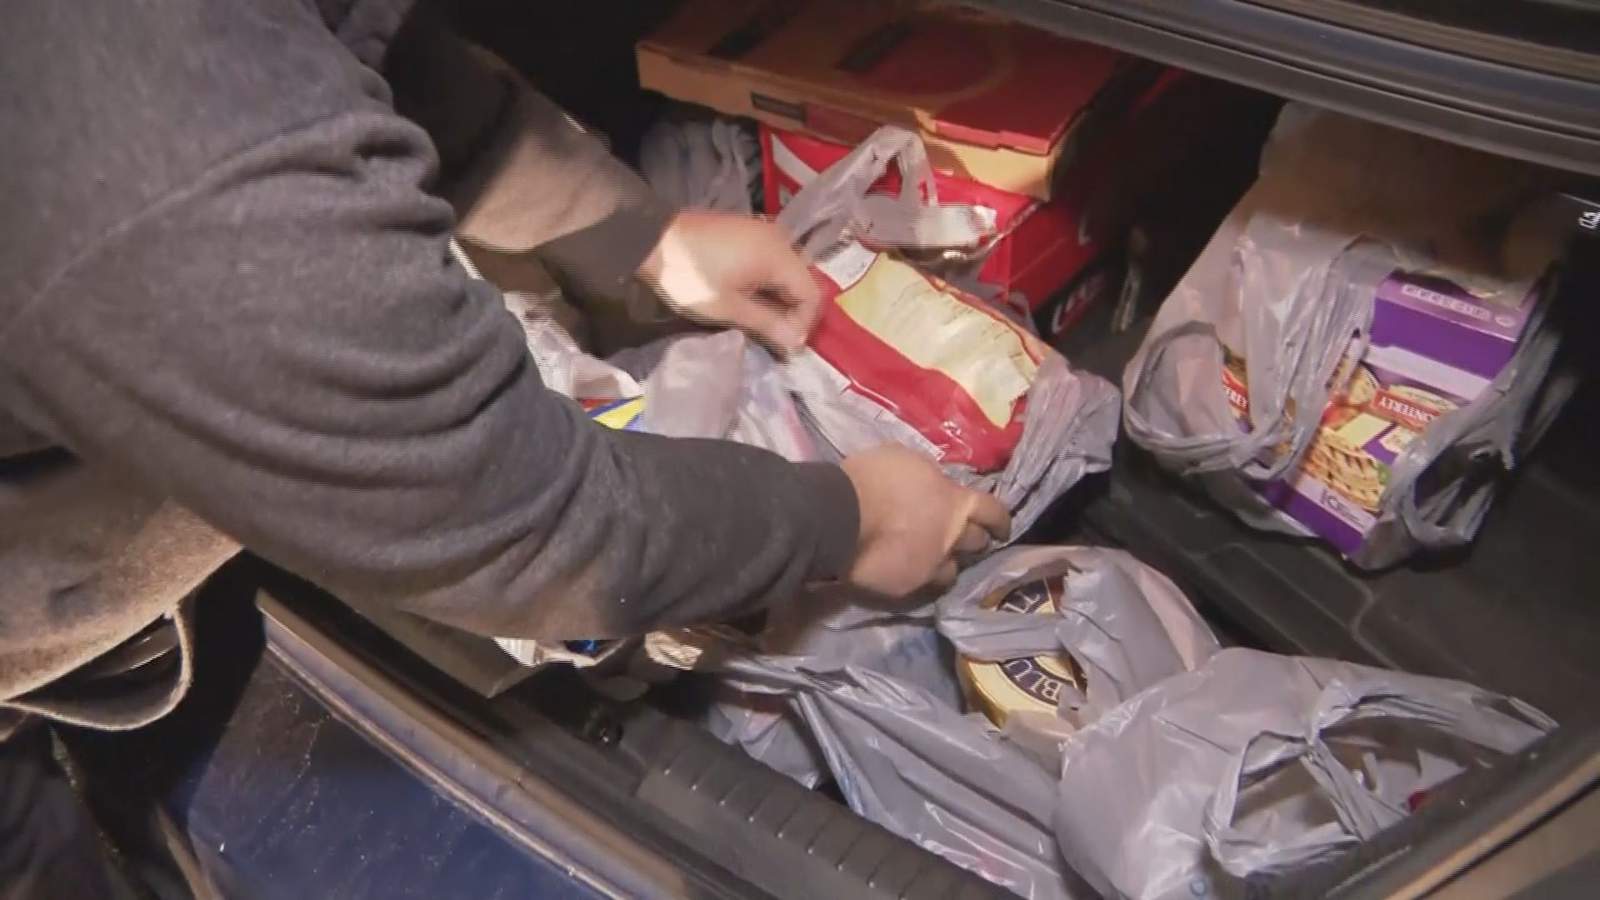 Houstonians grab last-minute items before winter storm